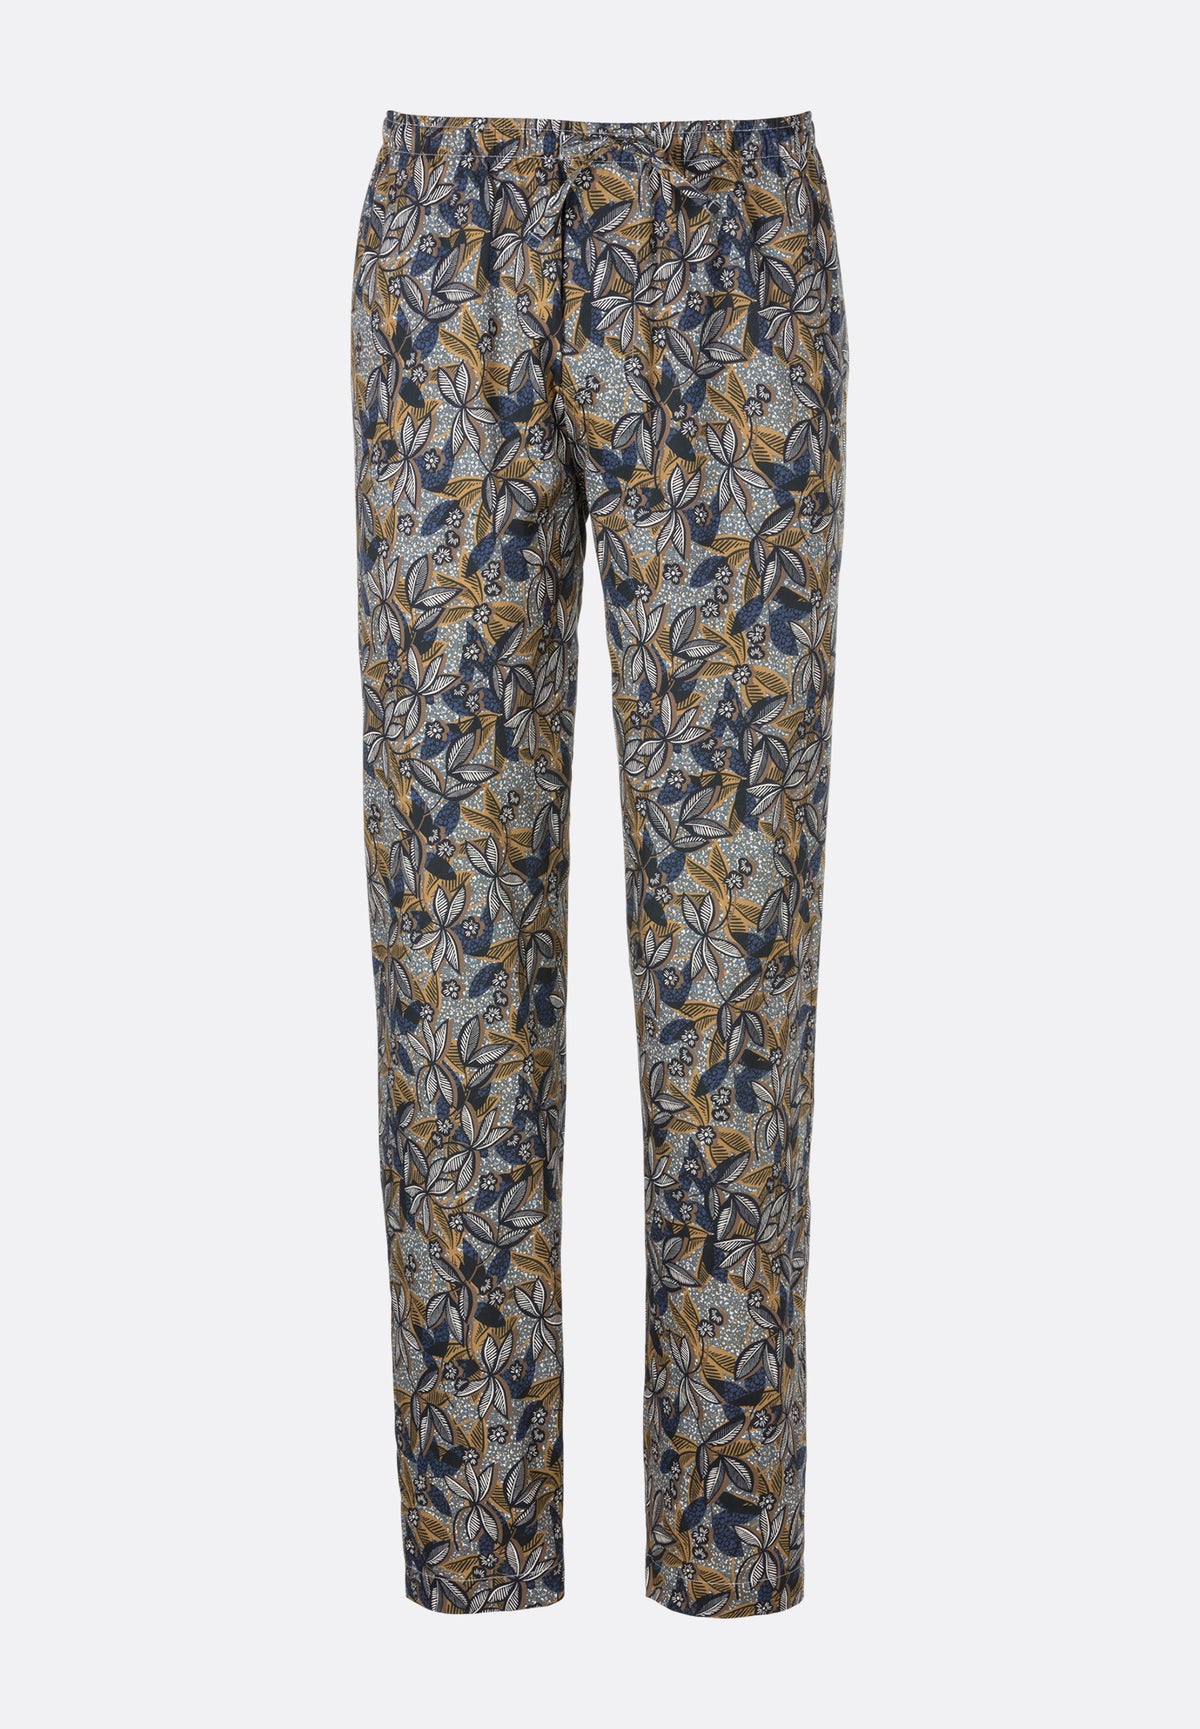 Cotton Sateen Print | Pants Long - dark blue